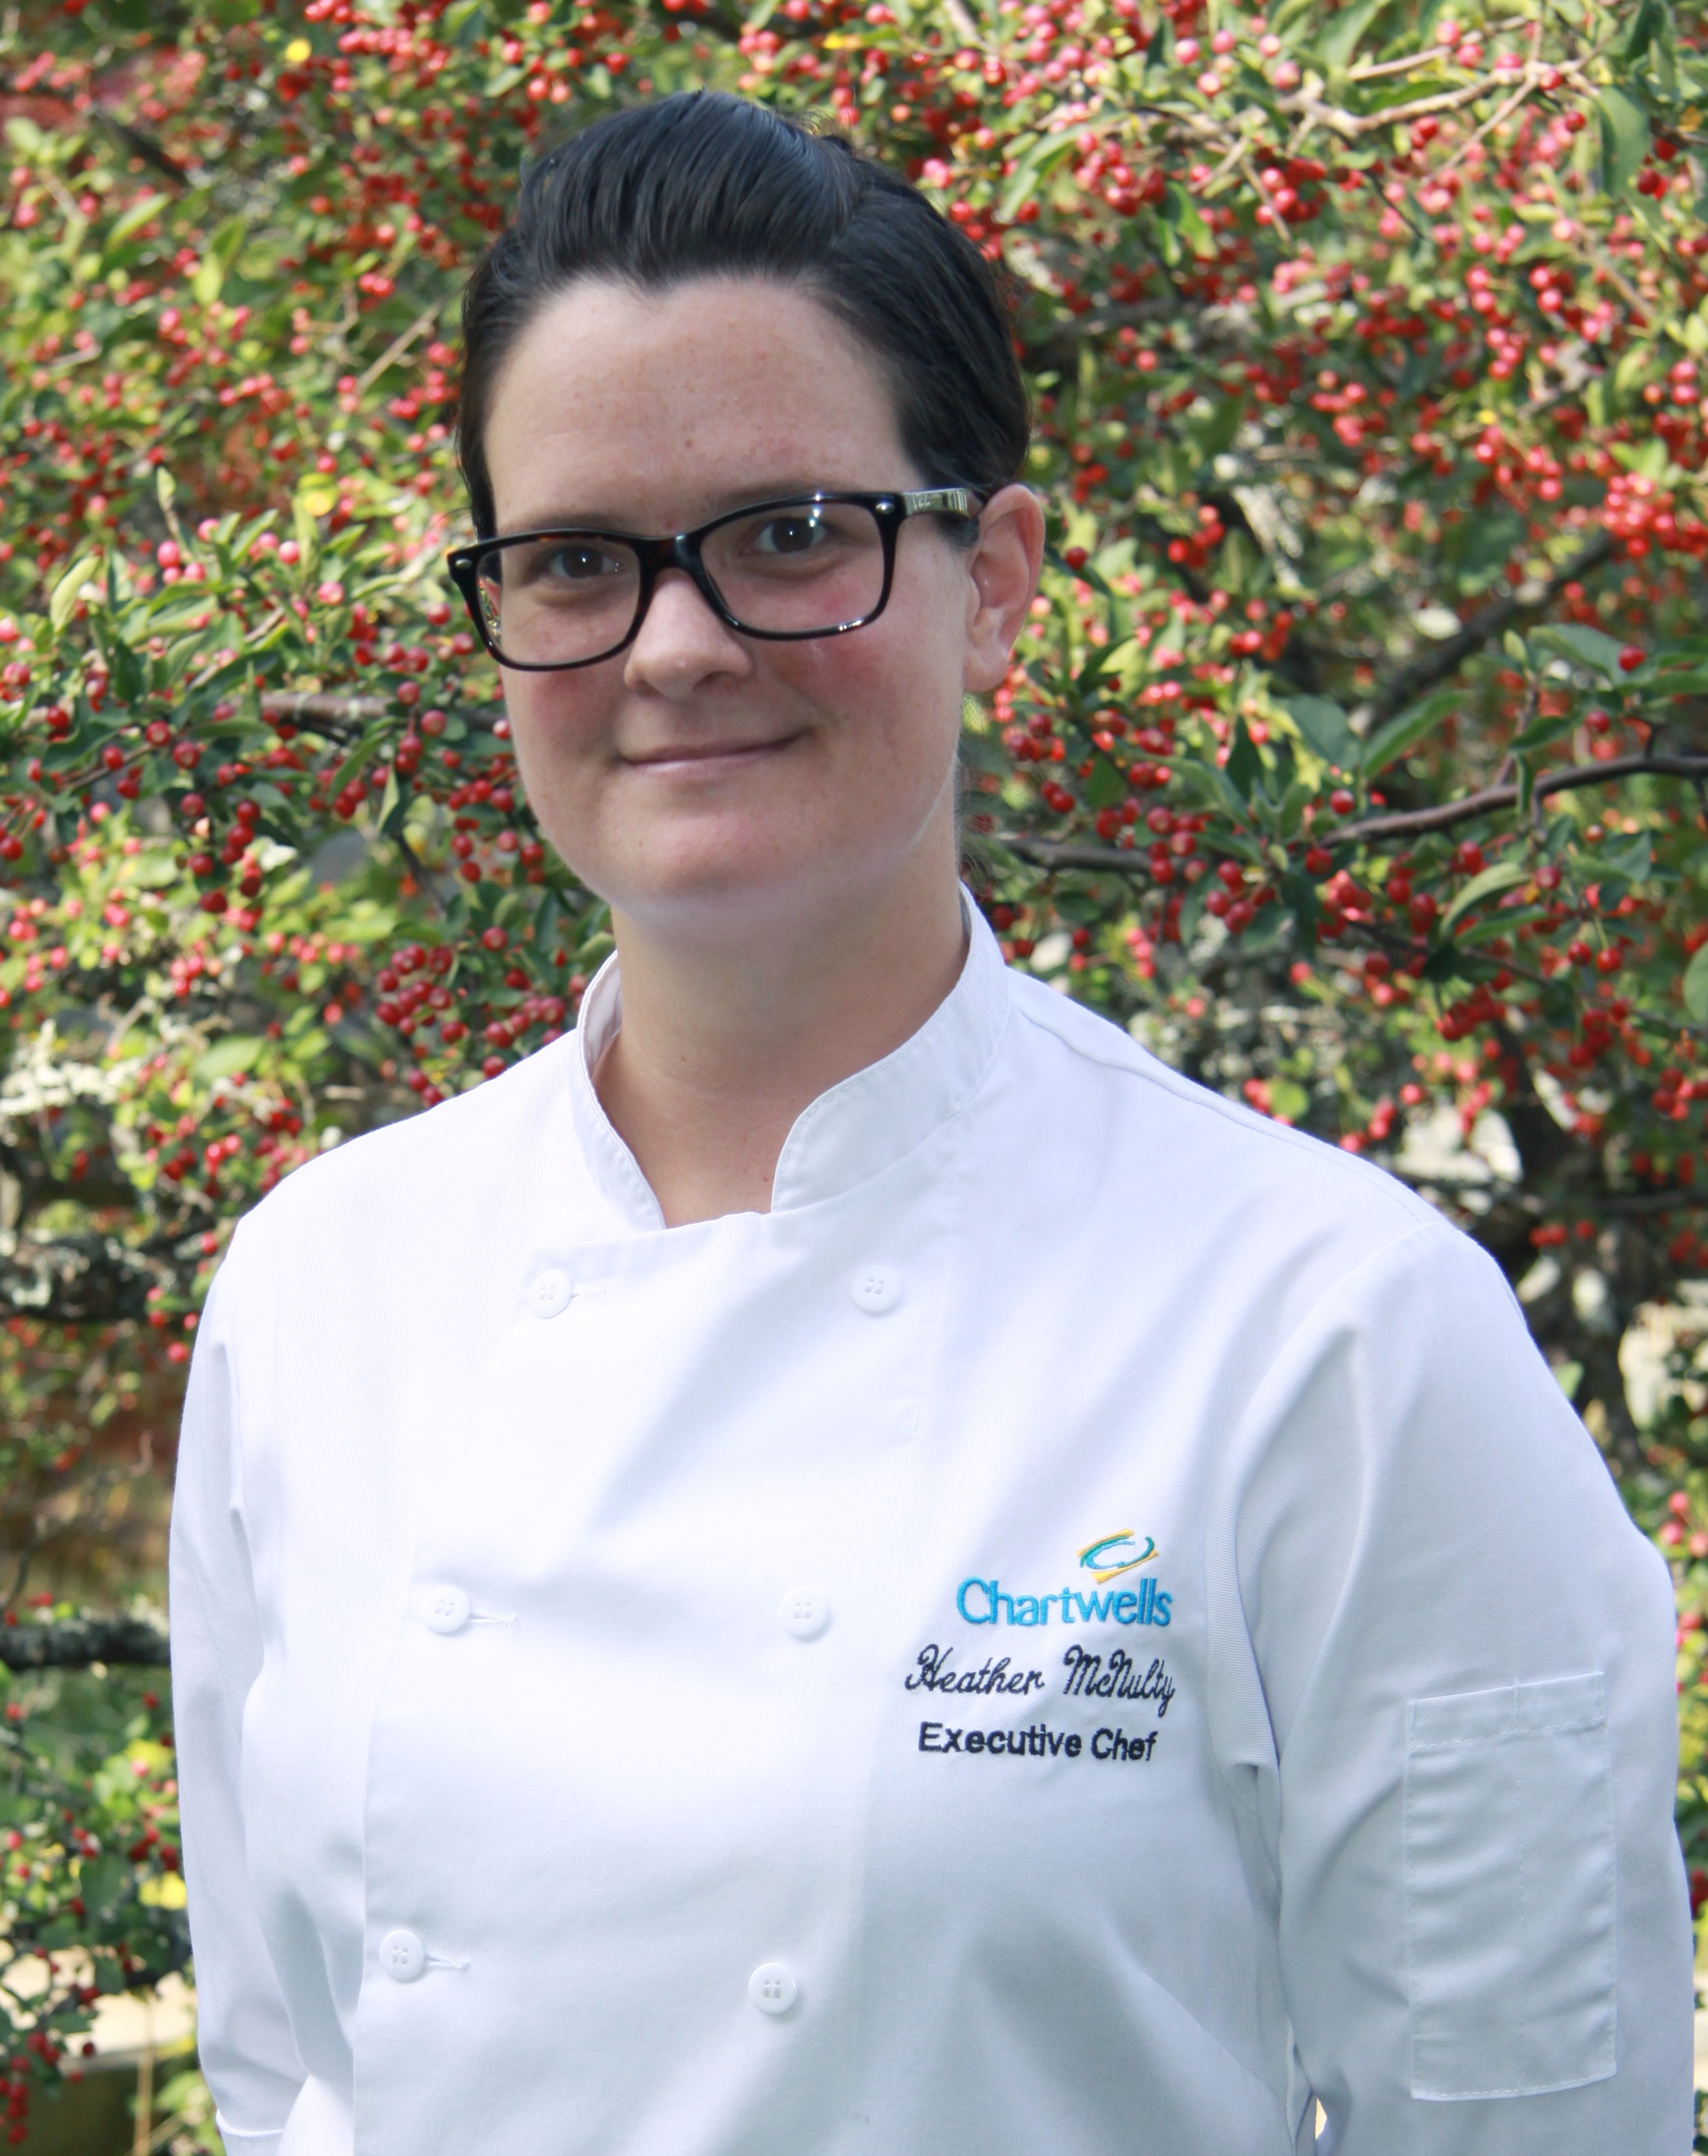 Executive Chef Heather McNulty - Executive Chef